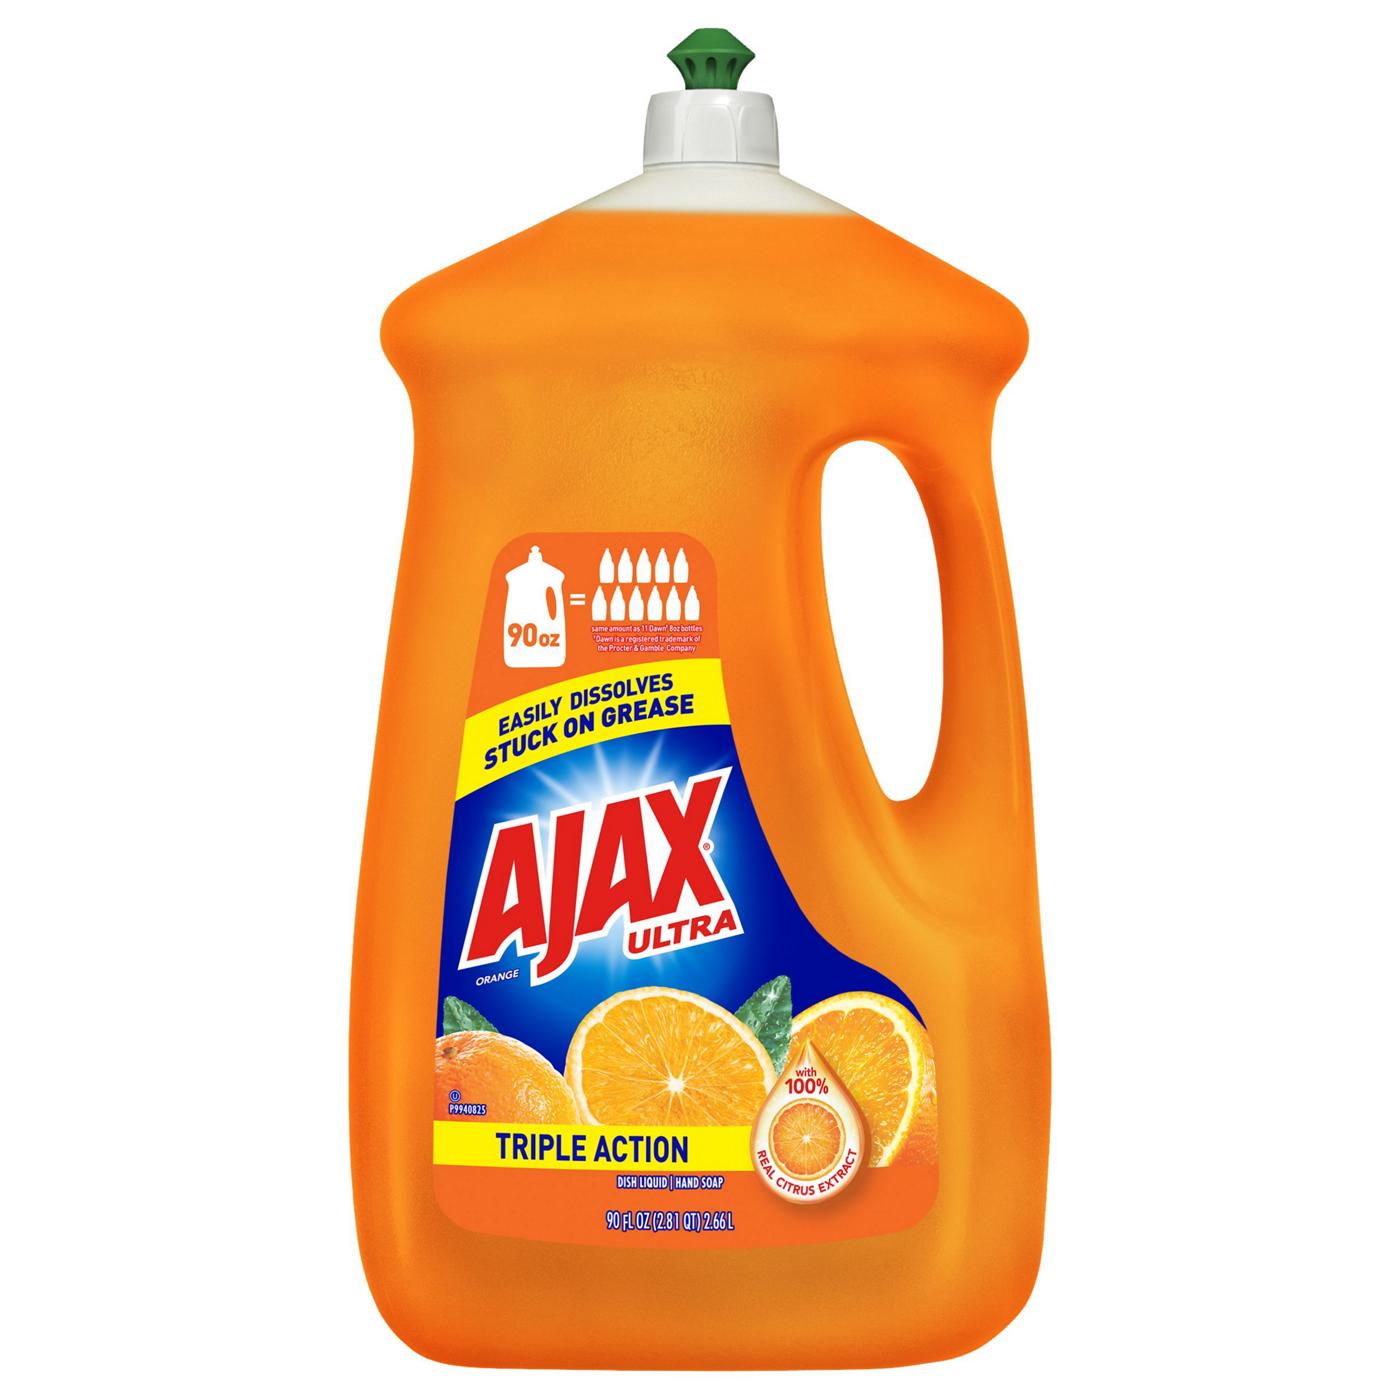 Ajax Ultra Triple Action Orange Scent Dish Soap; image 1 of 2